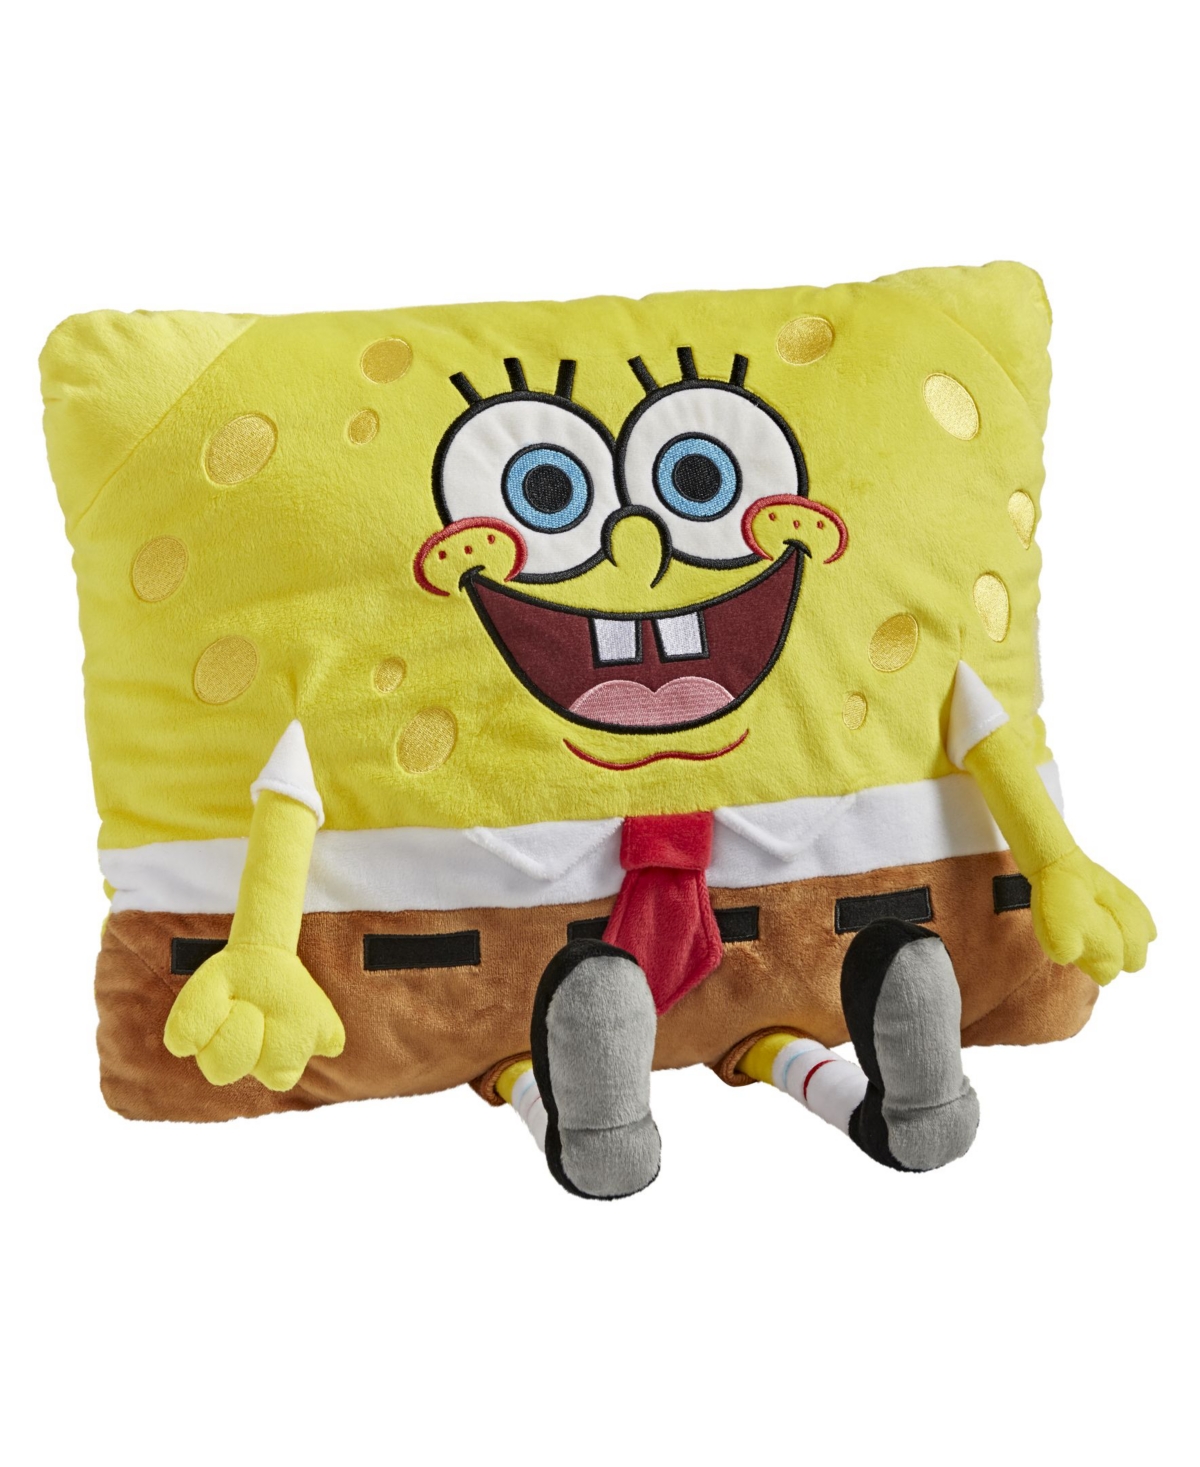 Pillow Pets Nickelodeon Spongebob Squarepants Stuffed Animal Plush Toy In Yellow